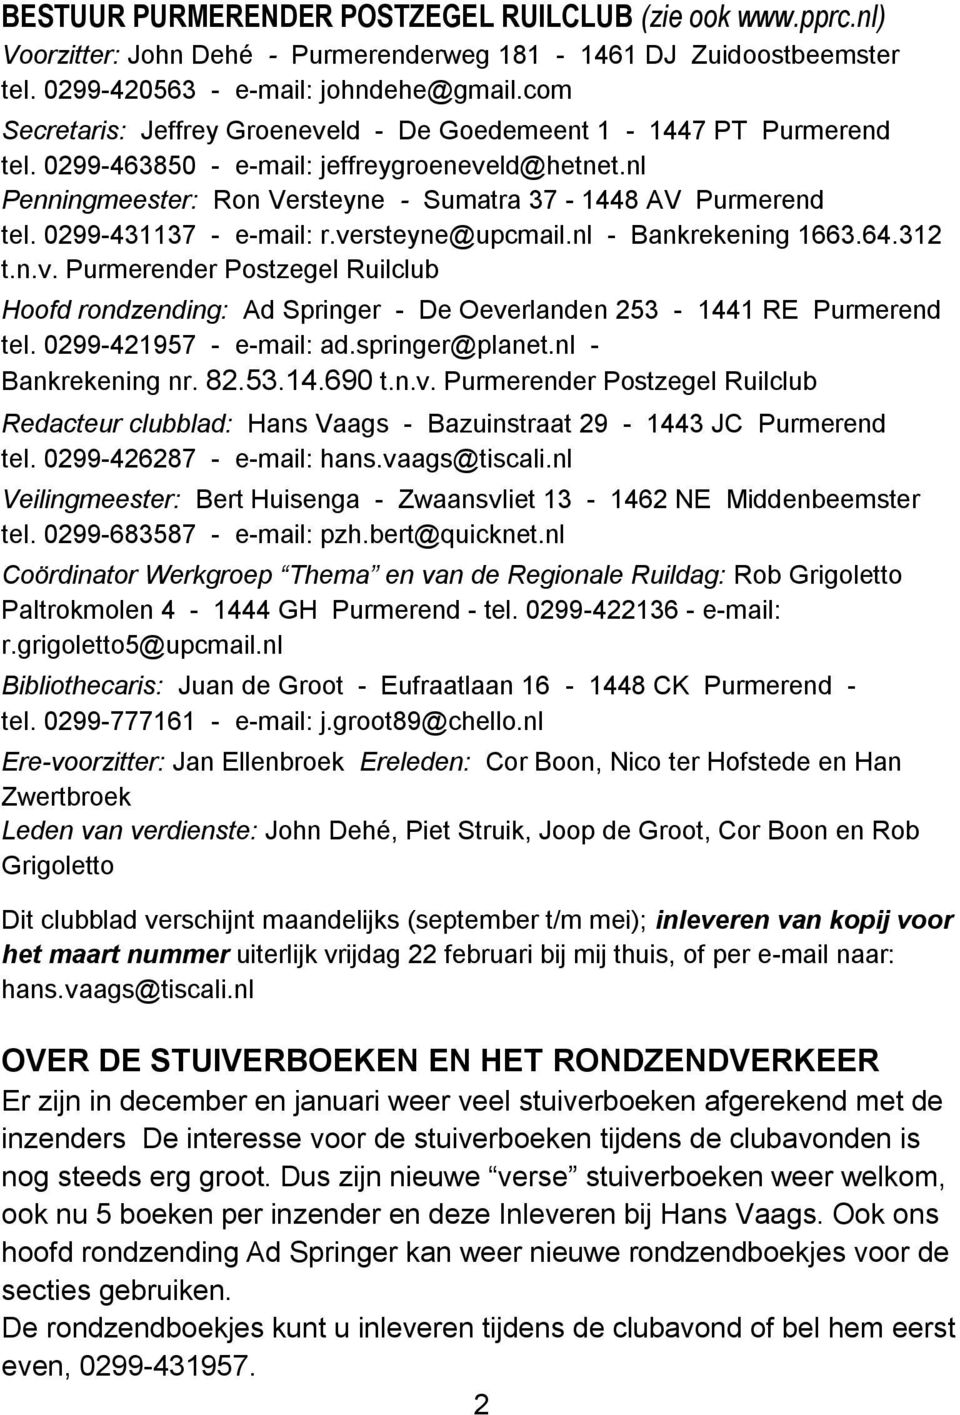 0299-431137 - e-mail: r.versteyne@upcmail.nl - Bankrekening 1663.64.312 t.n.v. Purmerender Postzegel Ruilclub Hoofd rondzending: Ad Springer - De Oeverlanden 253-1441 RE Purmerend tel.